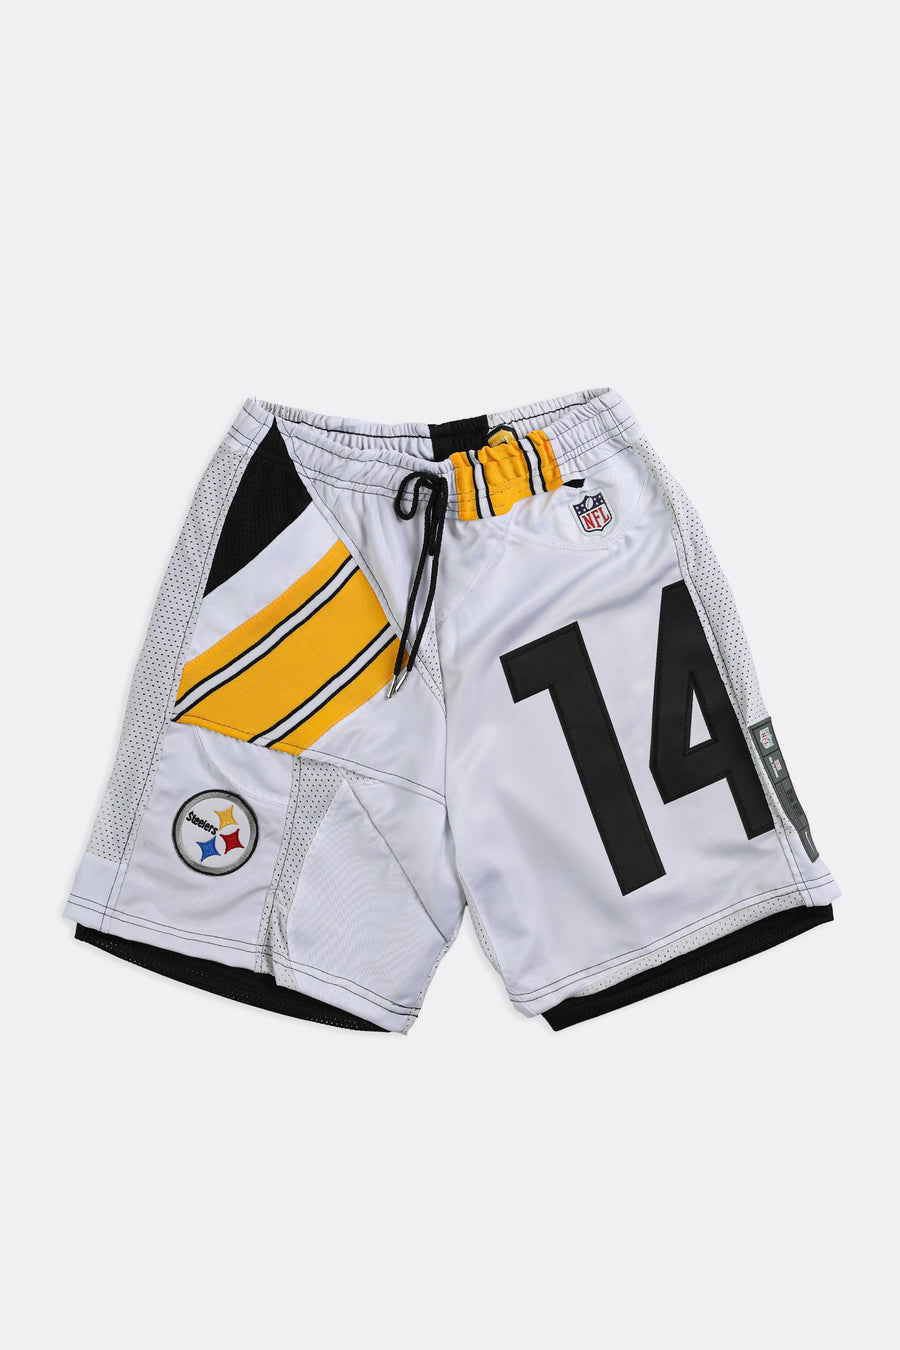 Unisex Rework Steelers NFL Jersey Shorts - Women-S, Men-XS